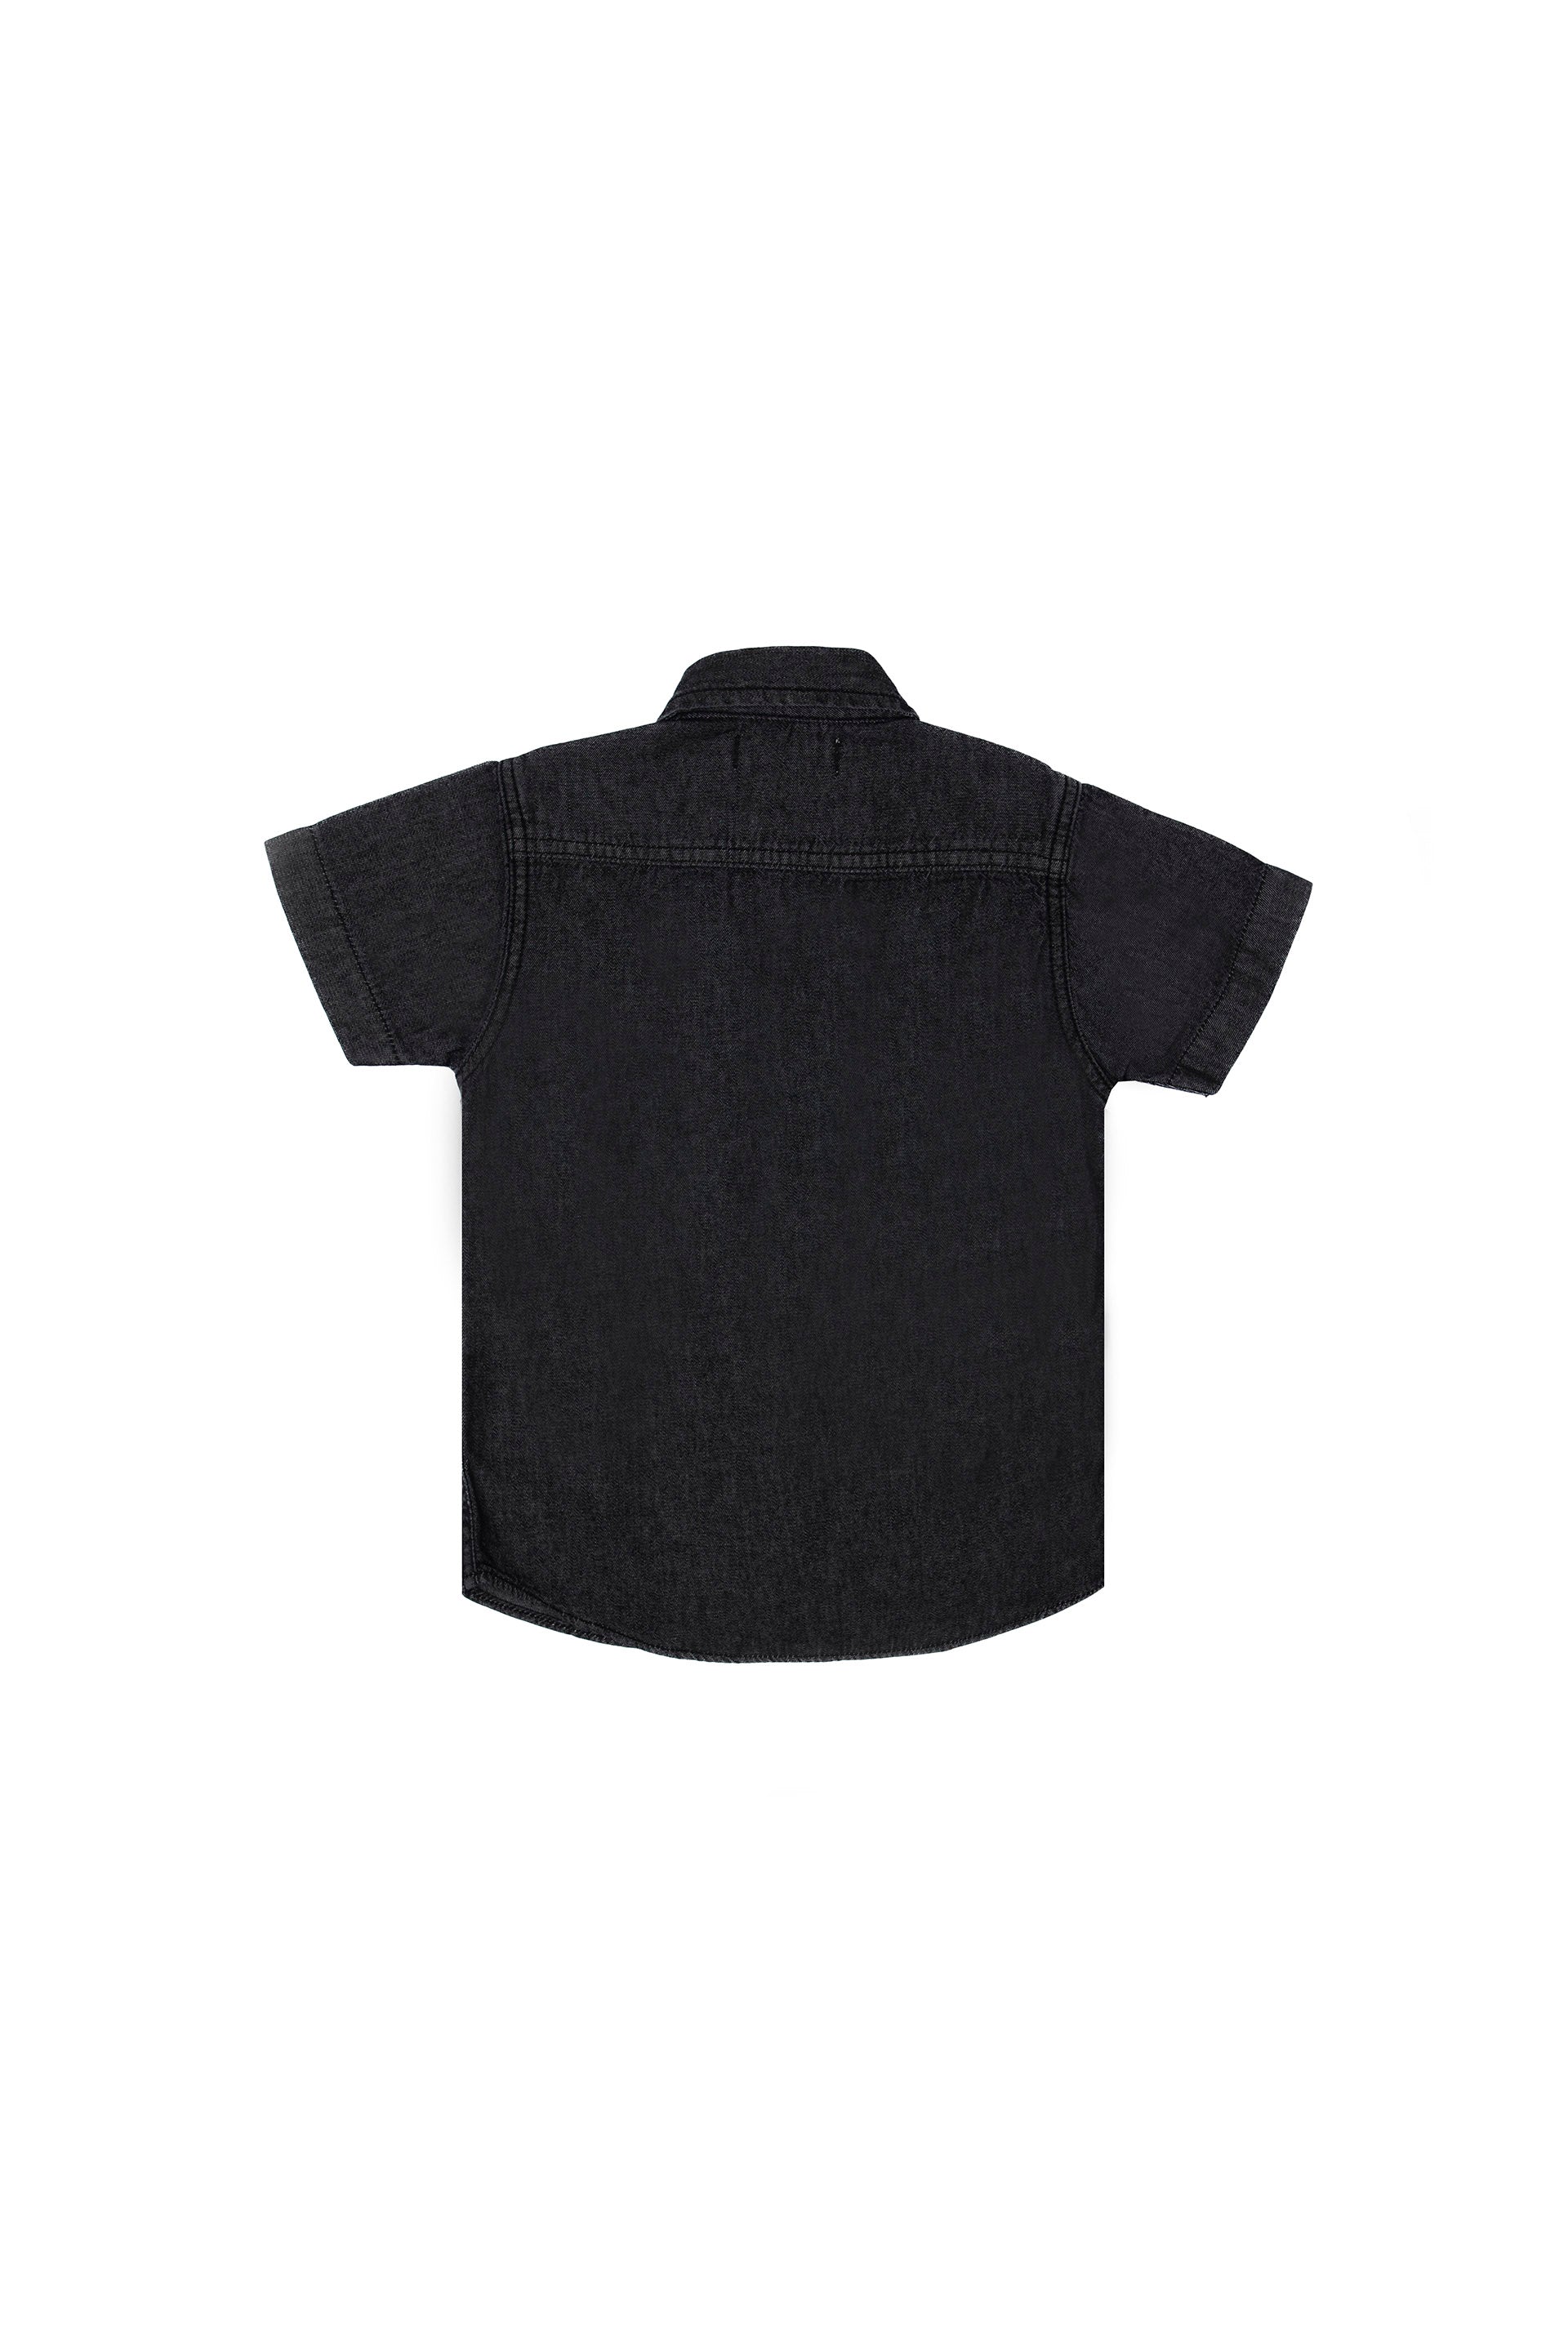 Printed Denim Shirt Black